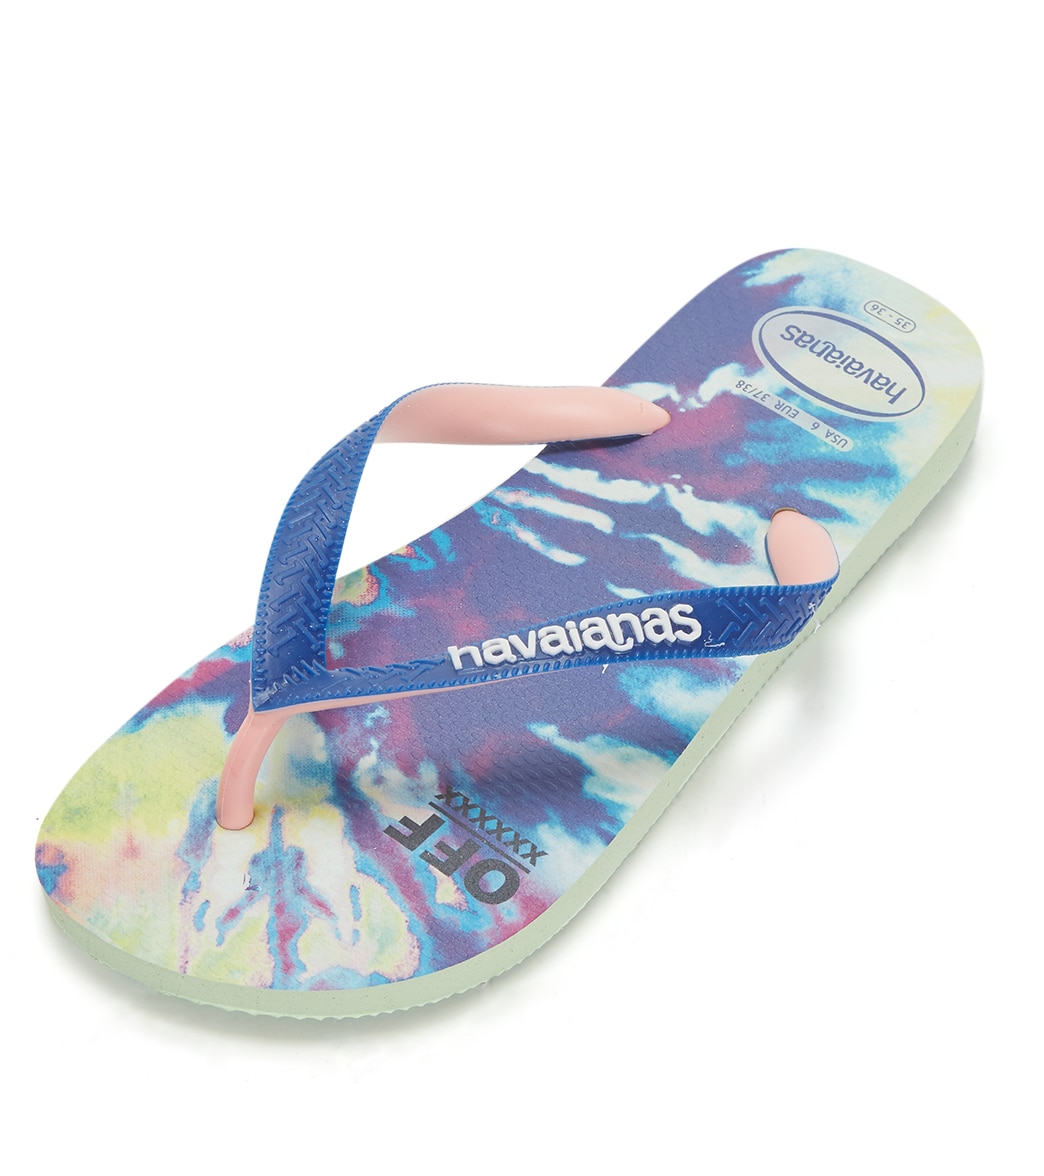 Havaianas Top Fashion Sandals - Apple Green 39/40 - Swimoutlet.com